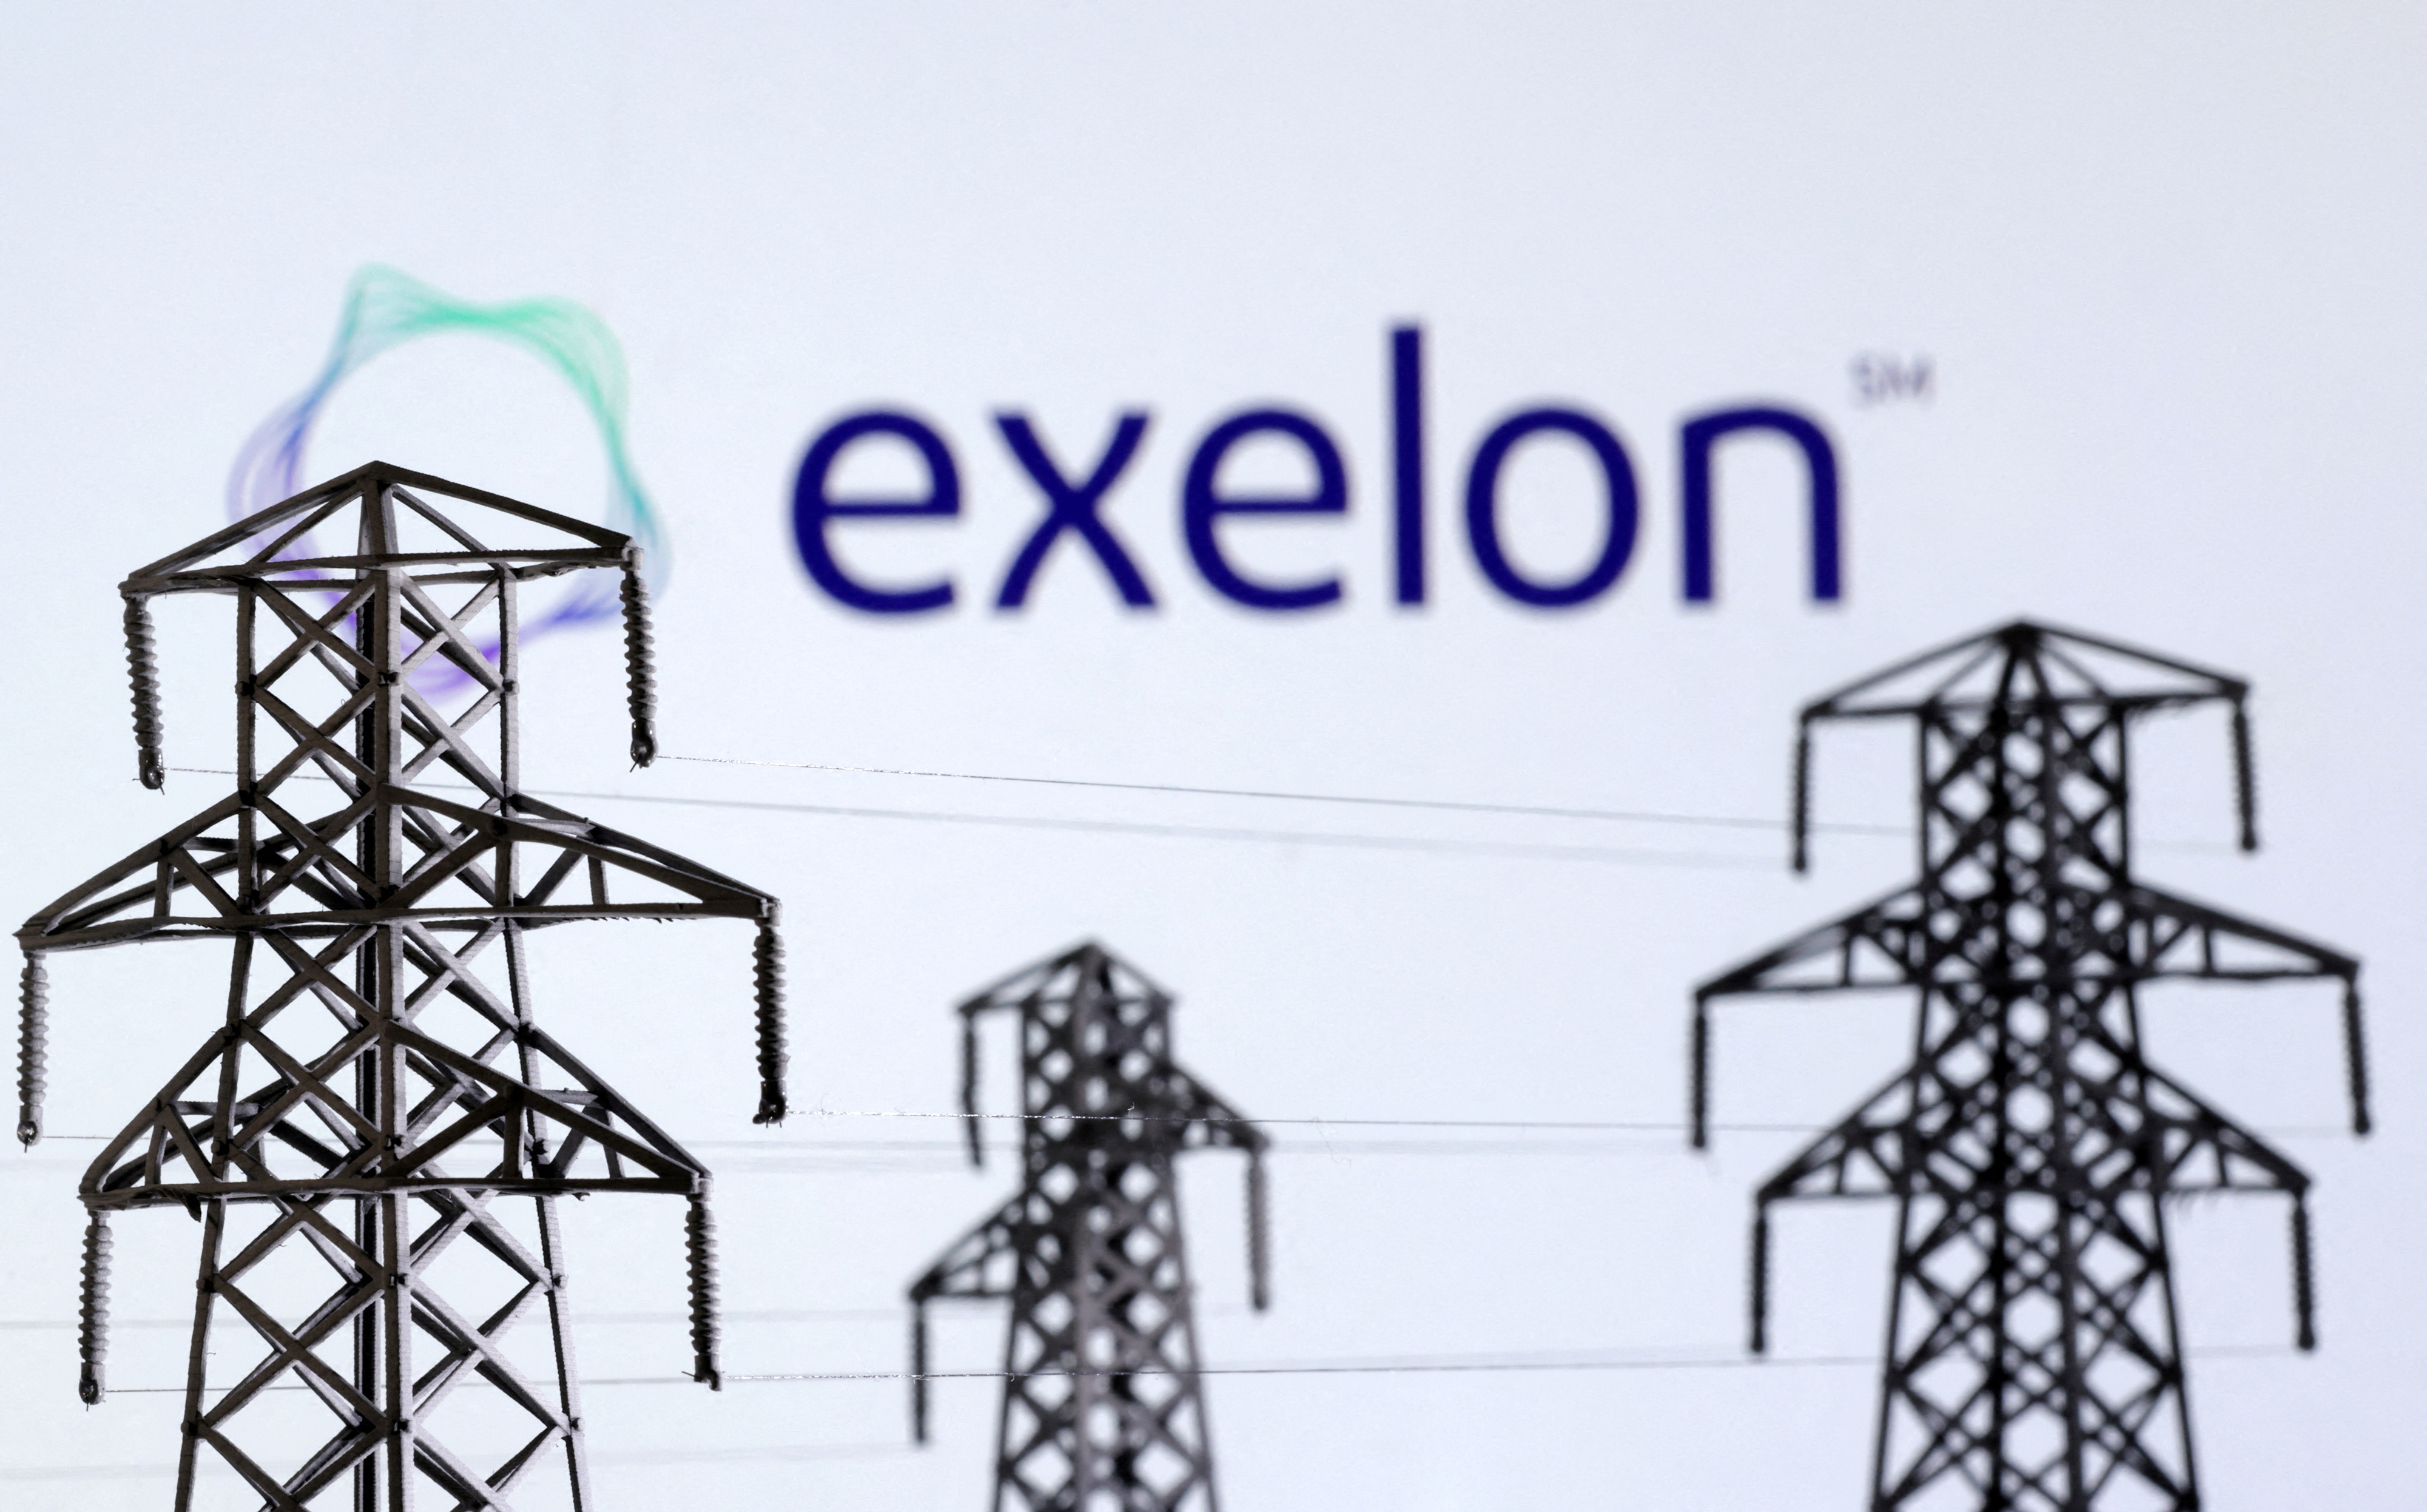 Illustration shows Electric power transmission pylon miniatures and Exelon Corporation logo